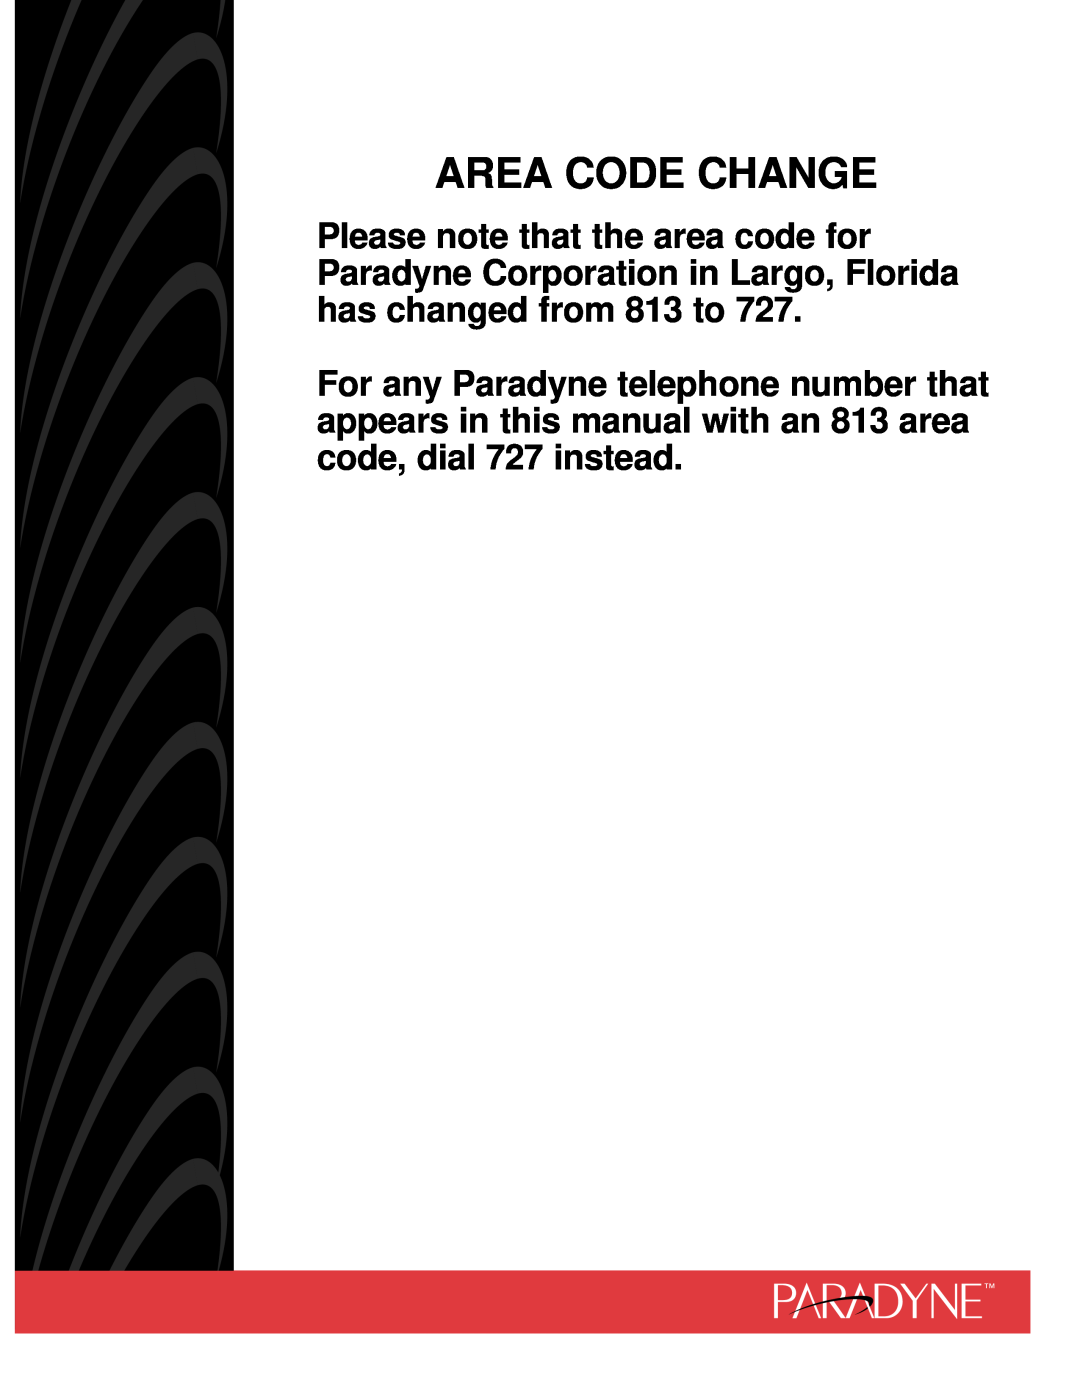 Paradyne 727 manual Area Code Change 